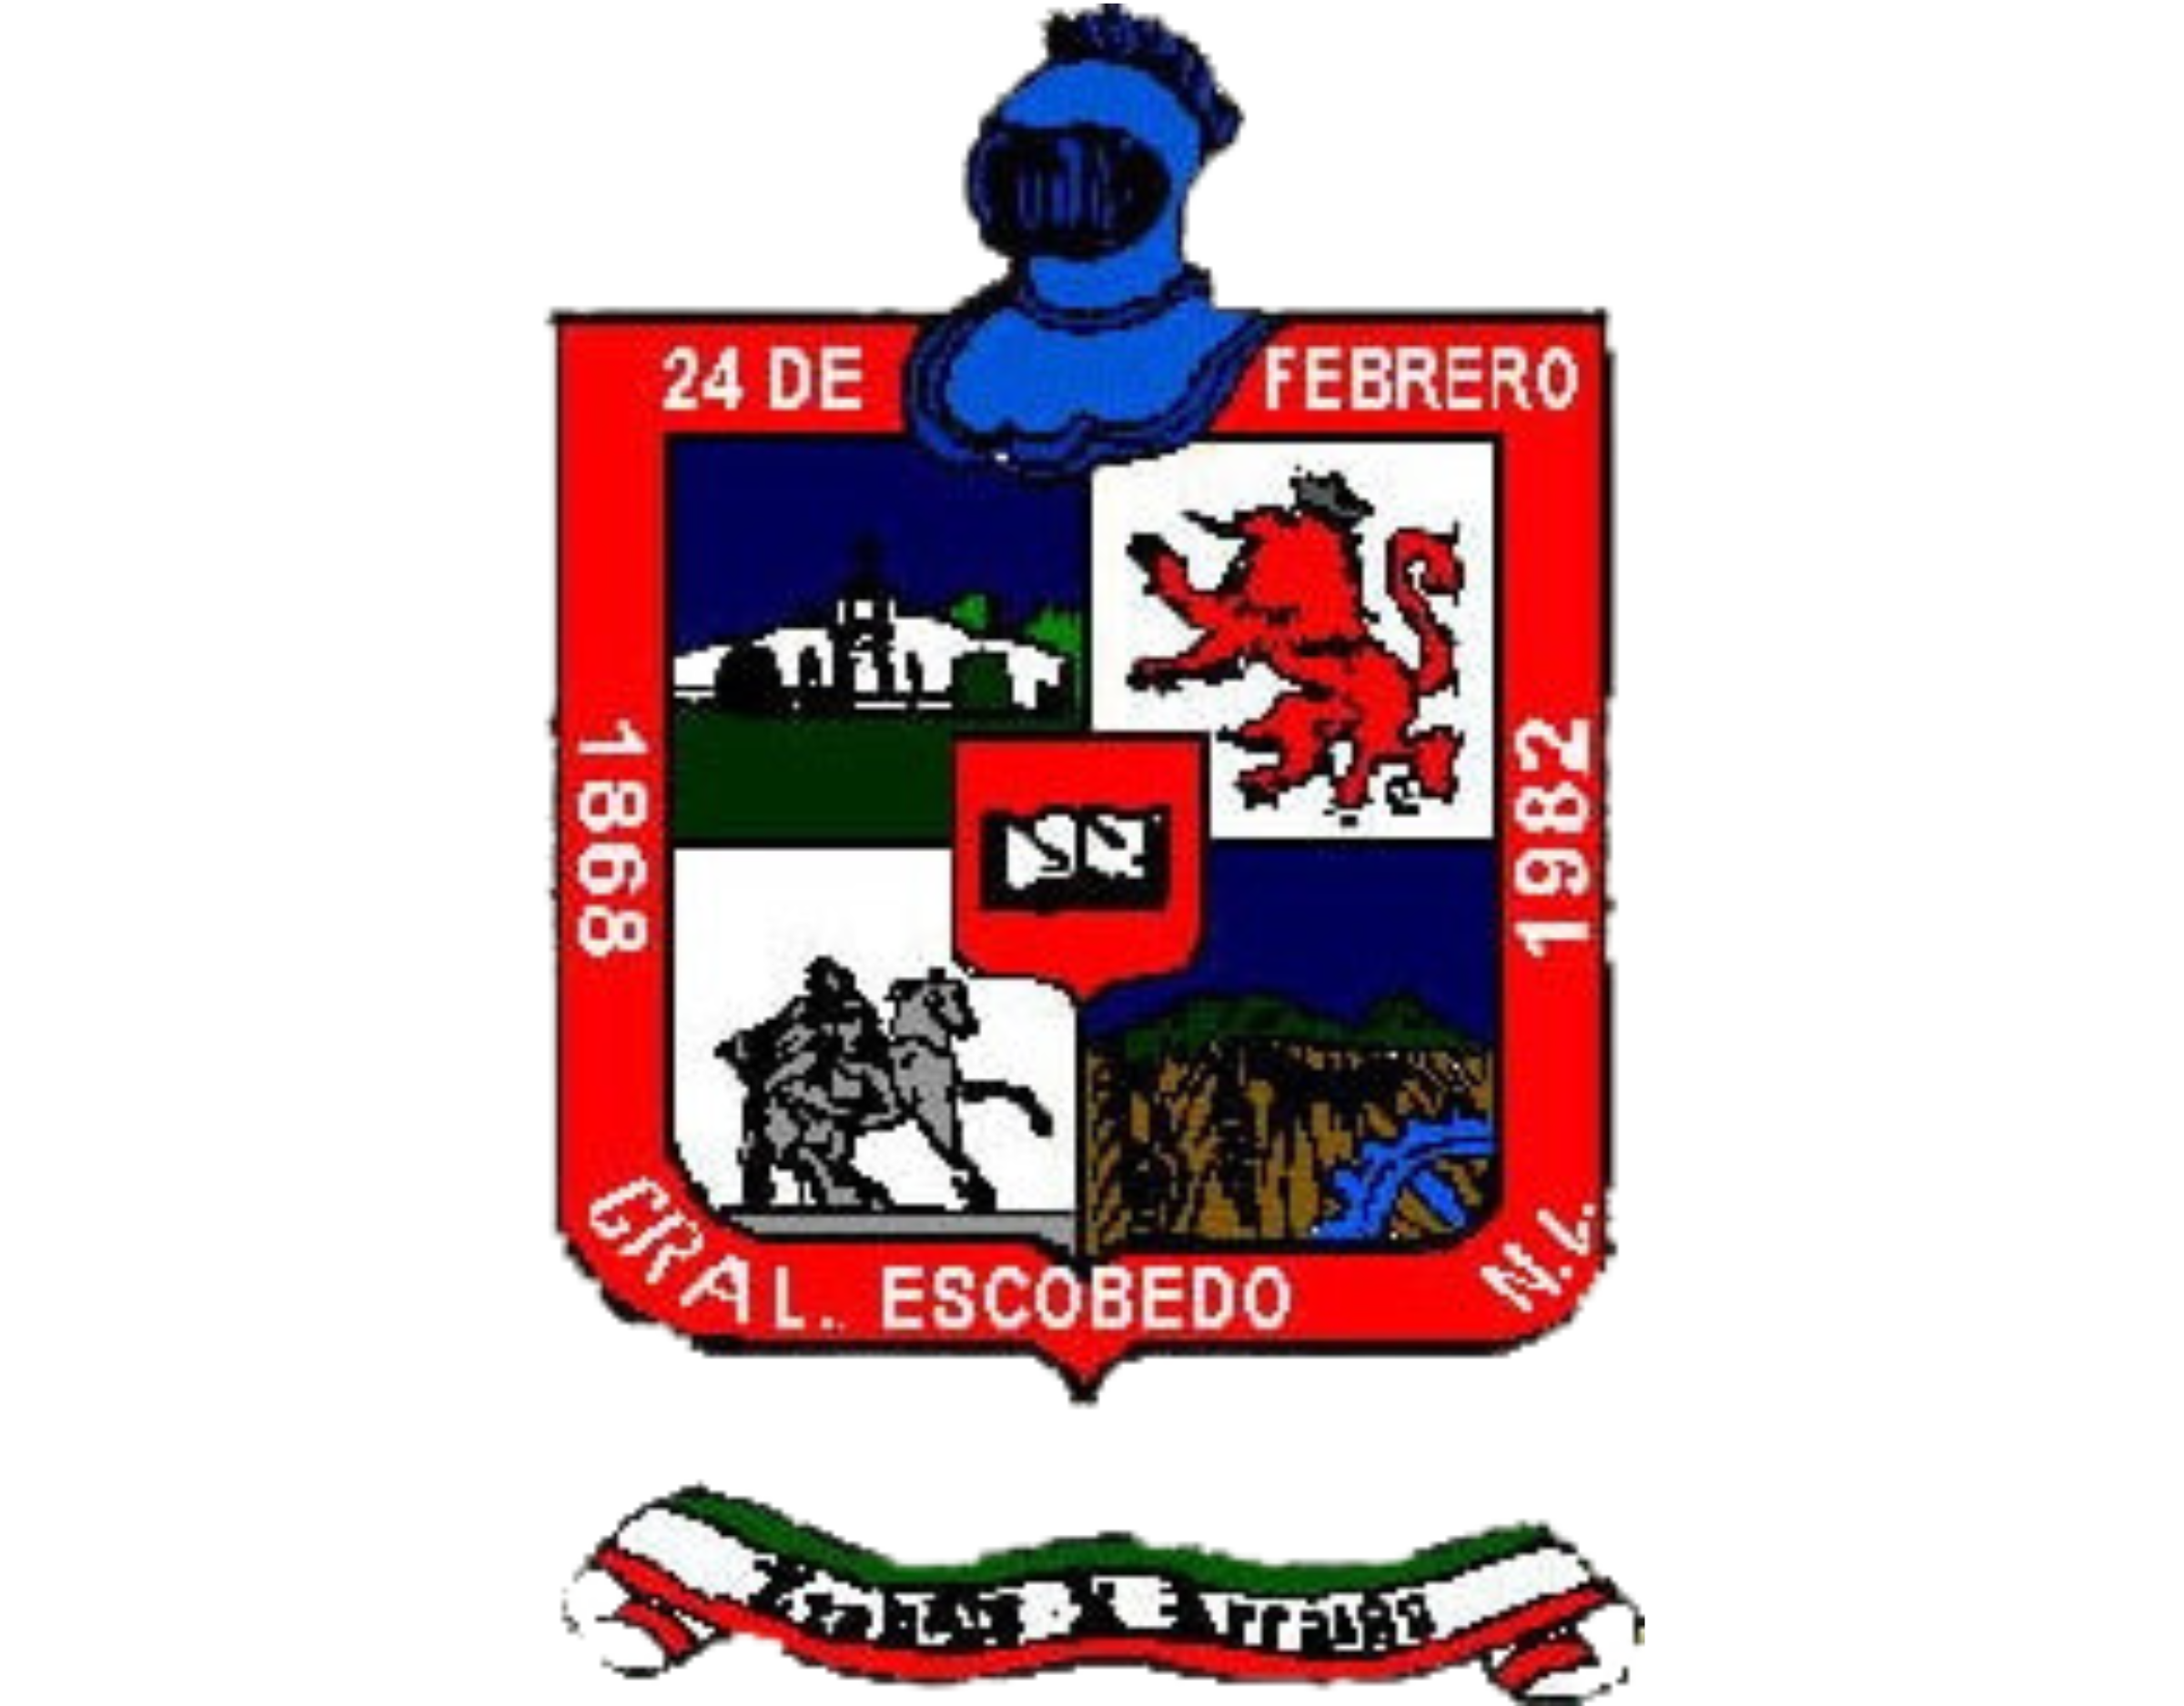 The flag of Escobedo, Mexico